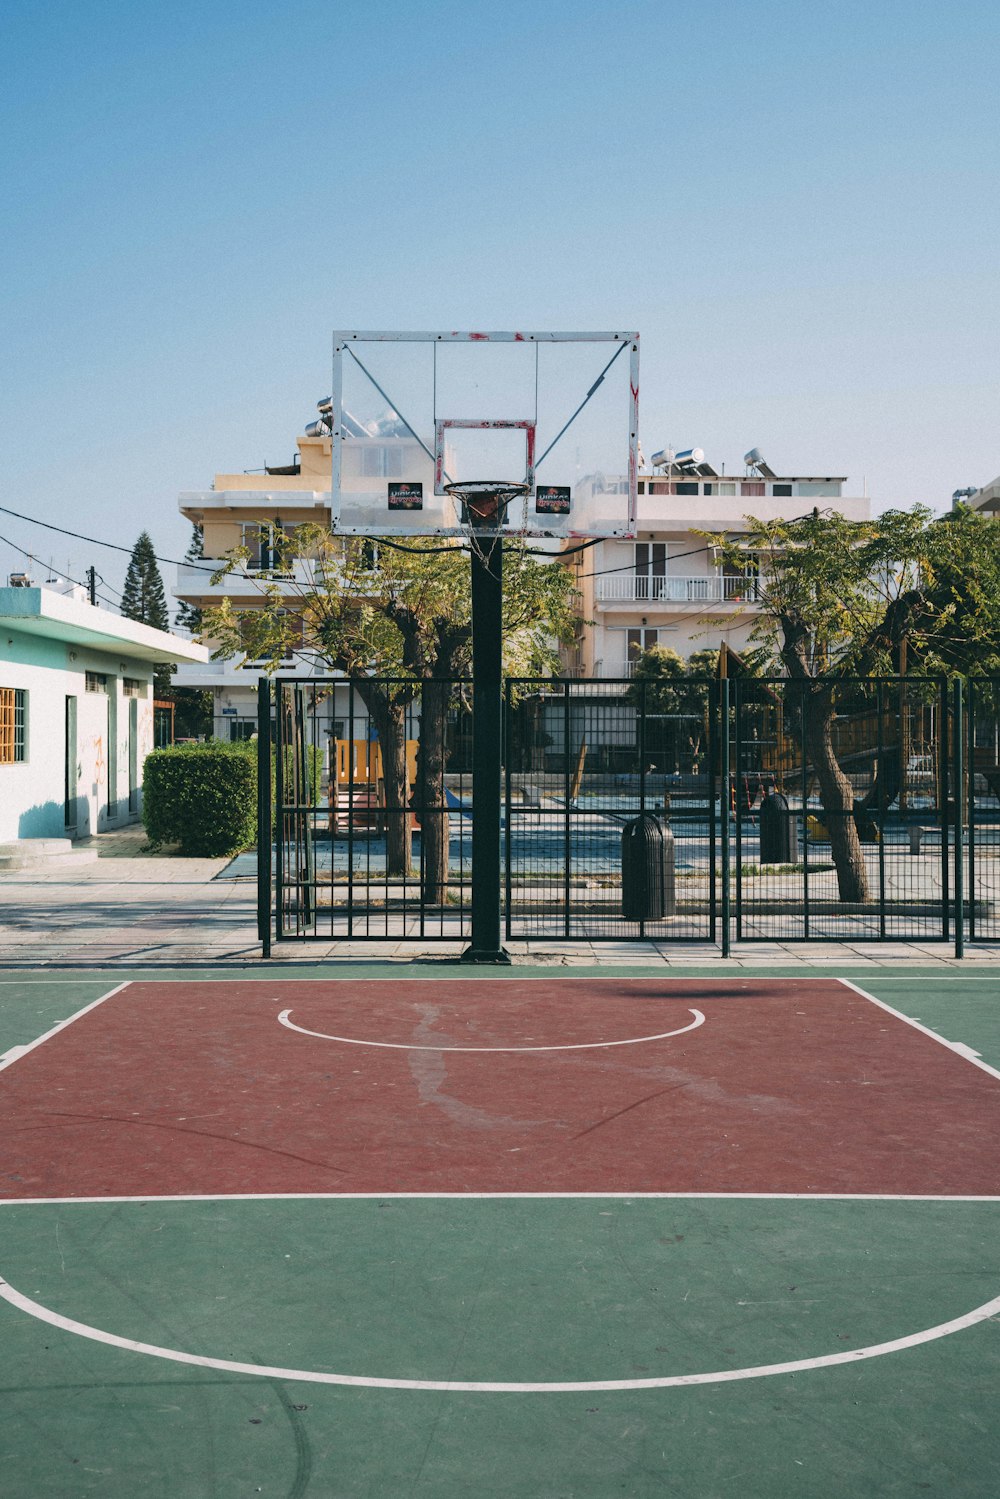 sistema de basquete no playground vazio